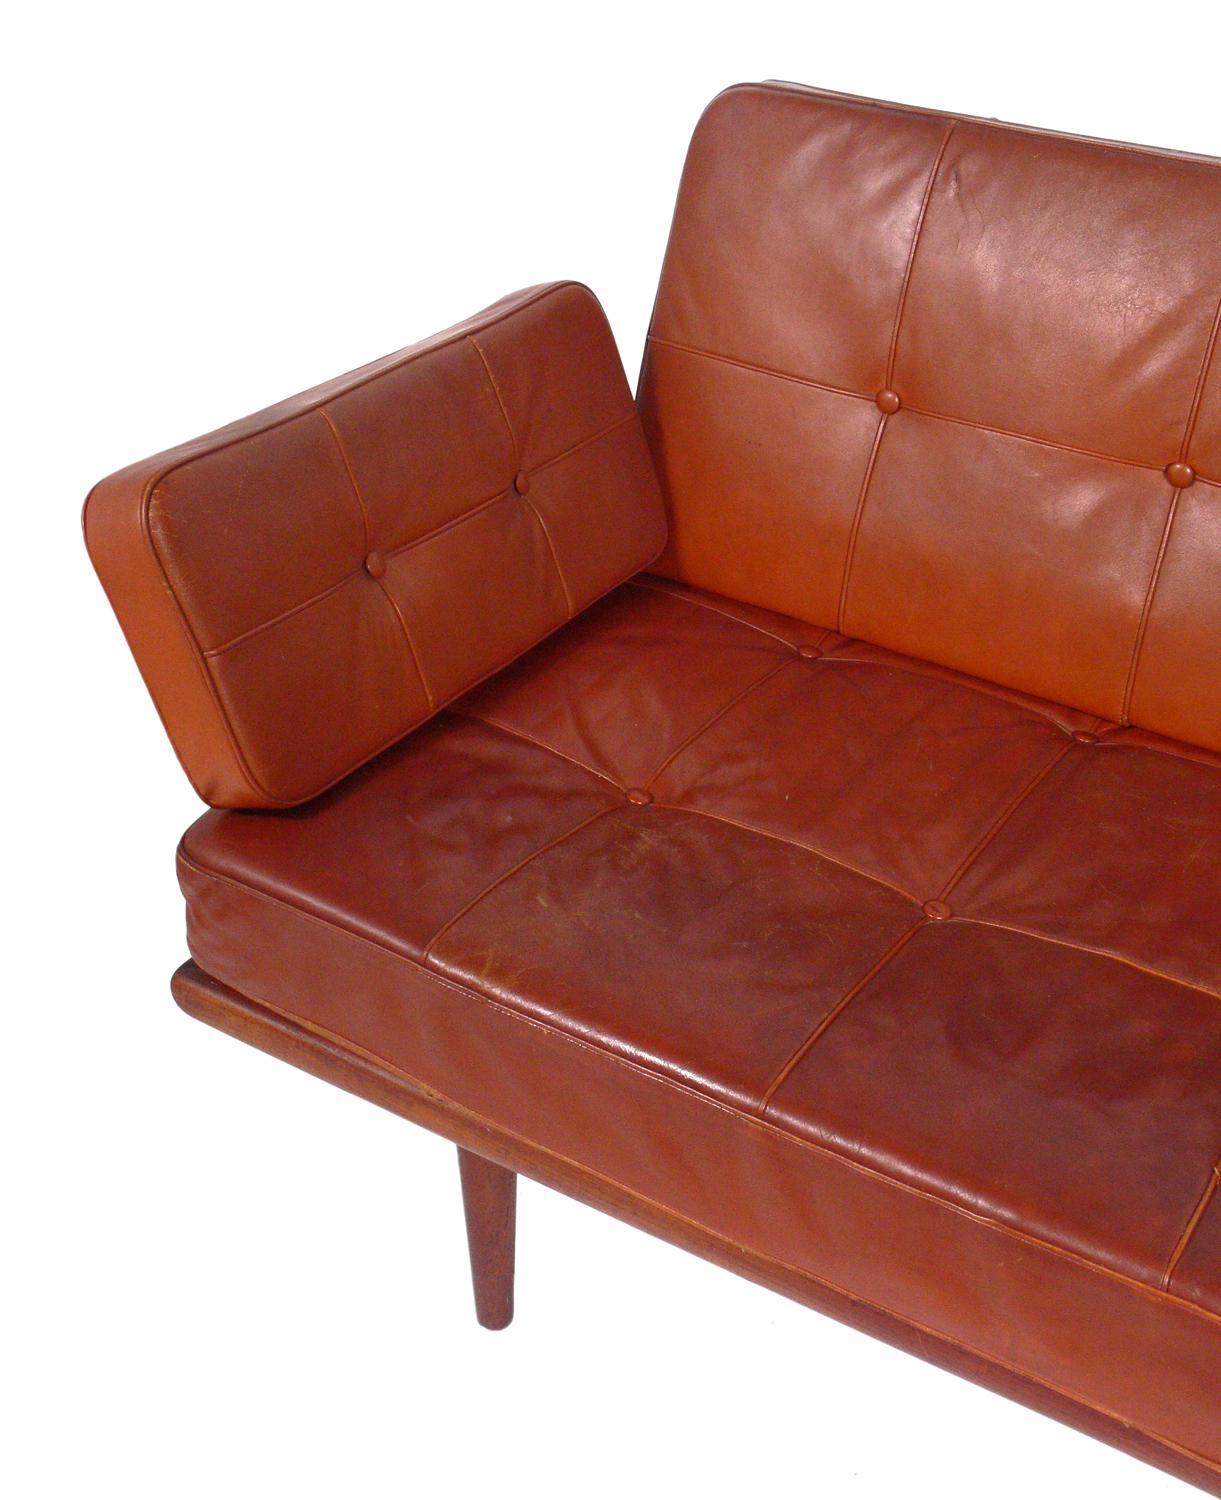 Mid-20th Century Danish Modern Sofa in Original Cognac Leather by Peter Hvidt